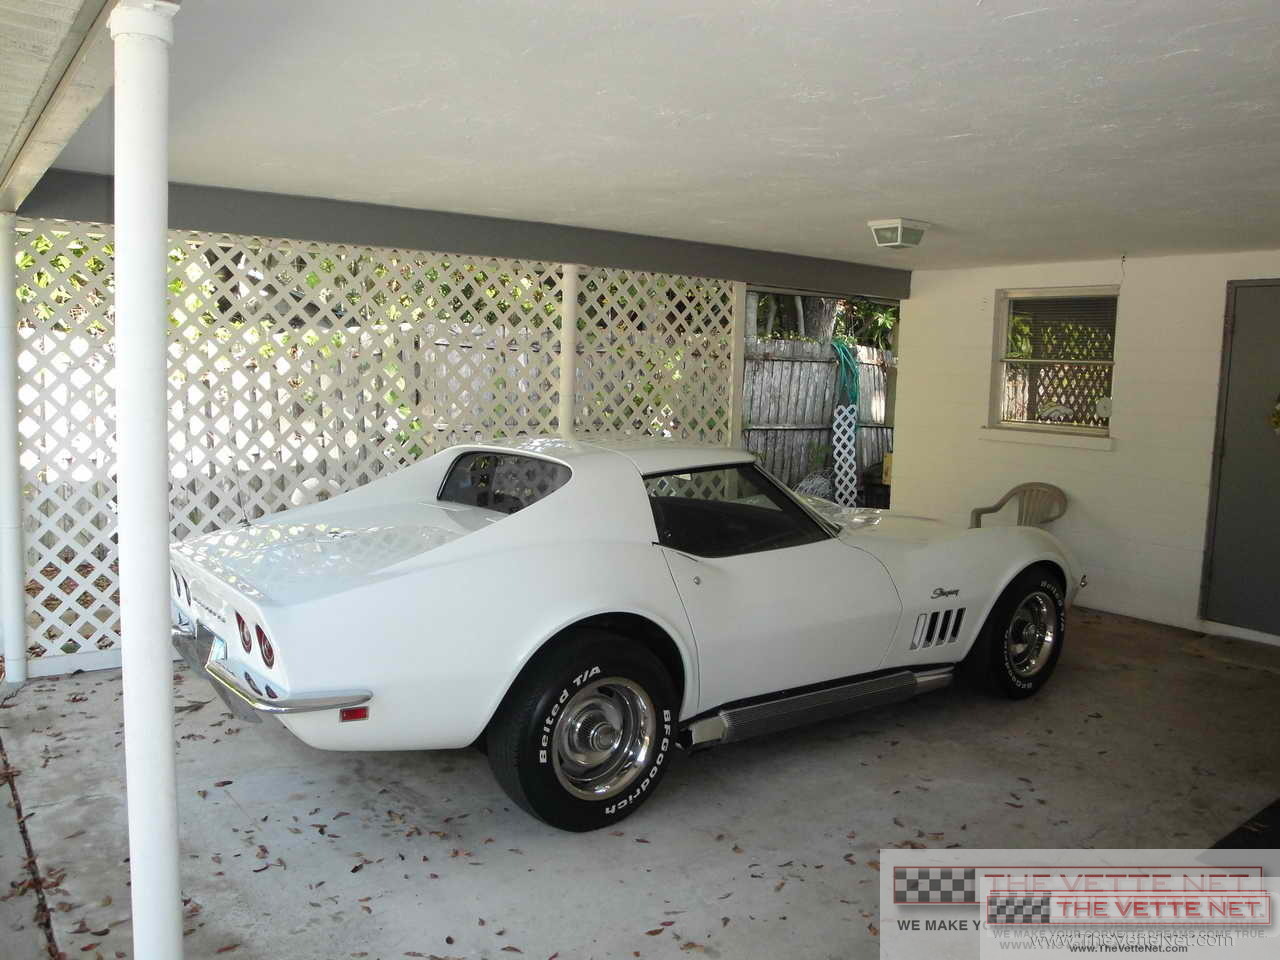 1969 Corvette T-Top Can-Am White code 972